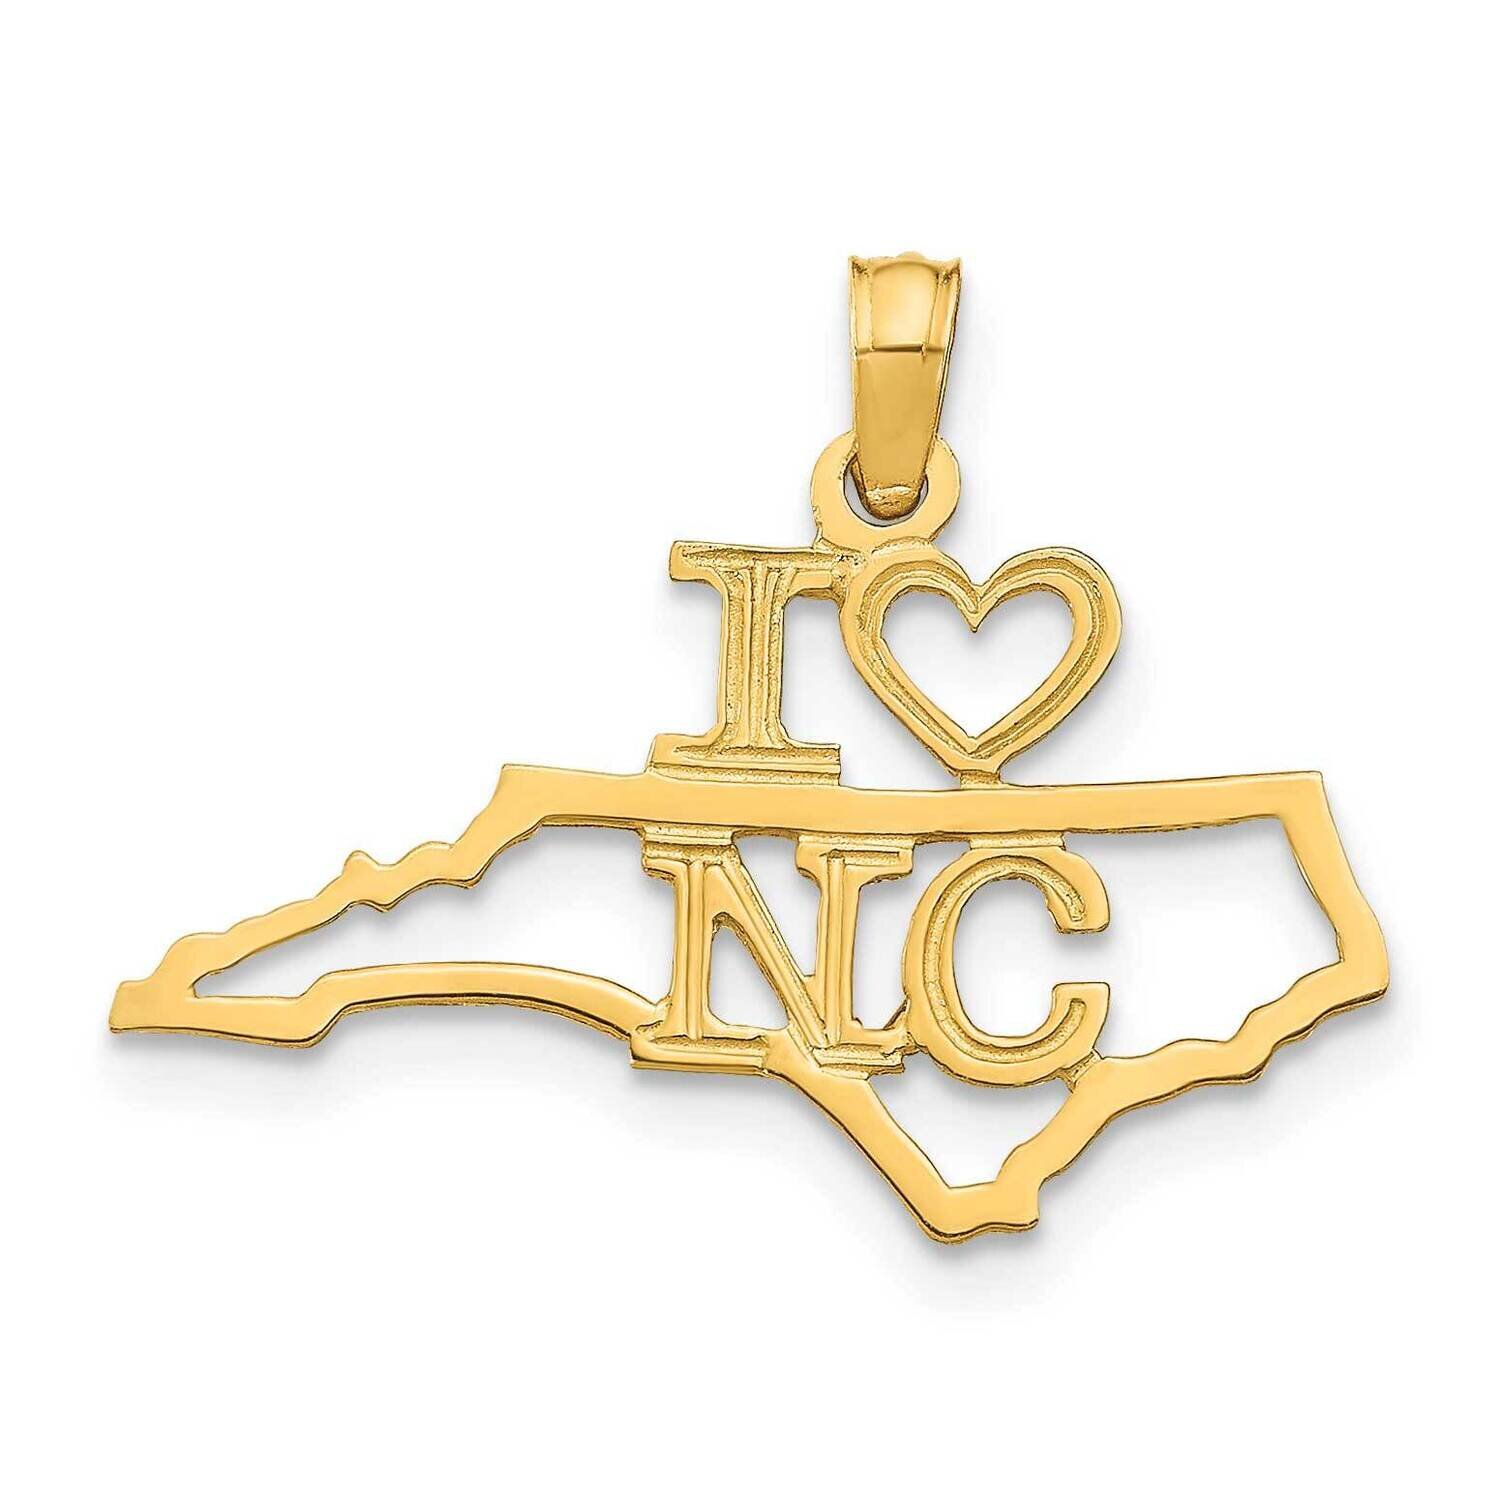 North Carolina State Pendant 14k Gold Solid D1175